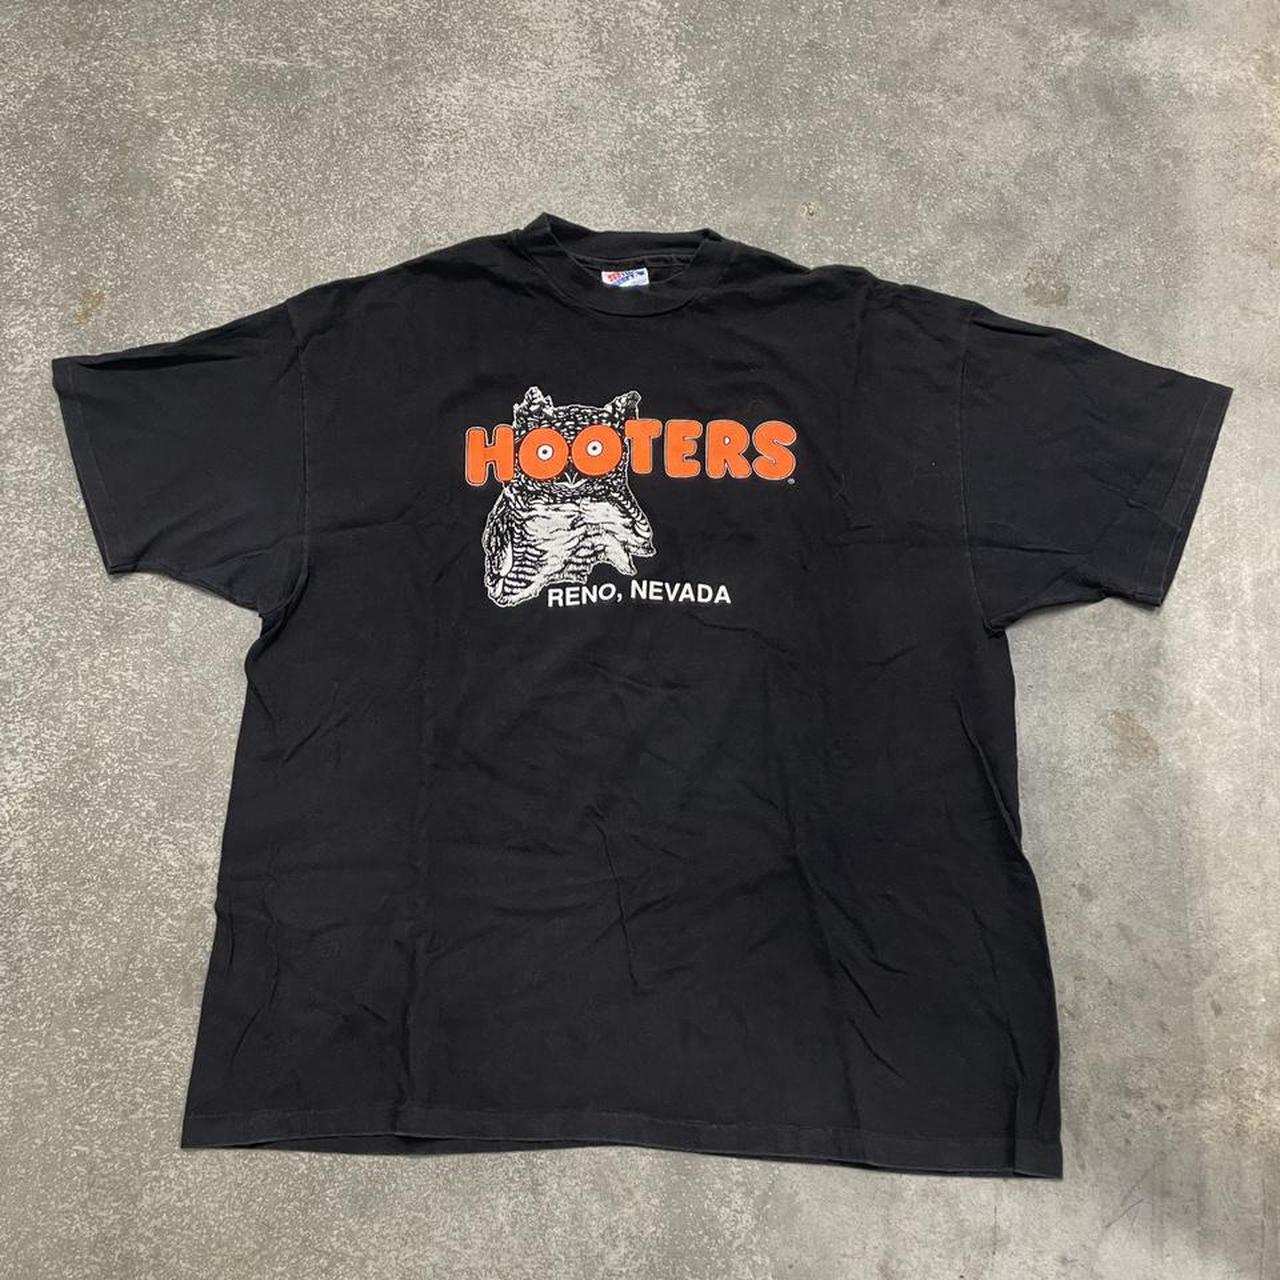 Product Image 1 - Vintage Hooters Reno Nevada Shirt